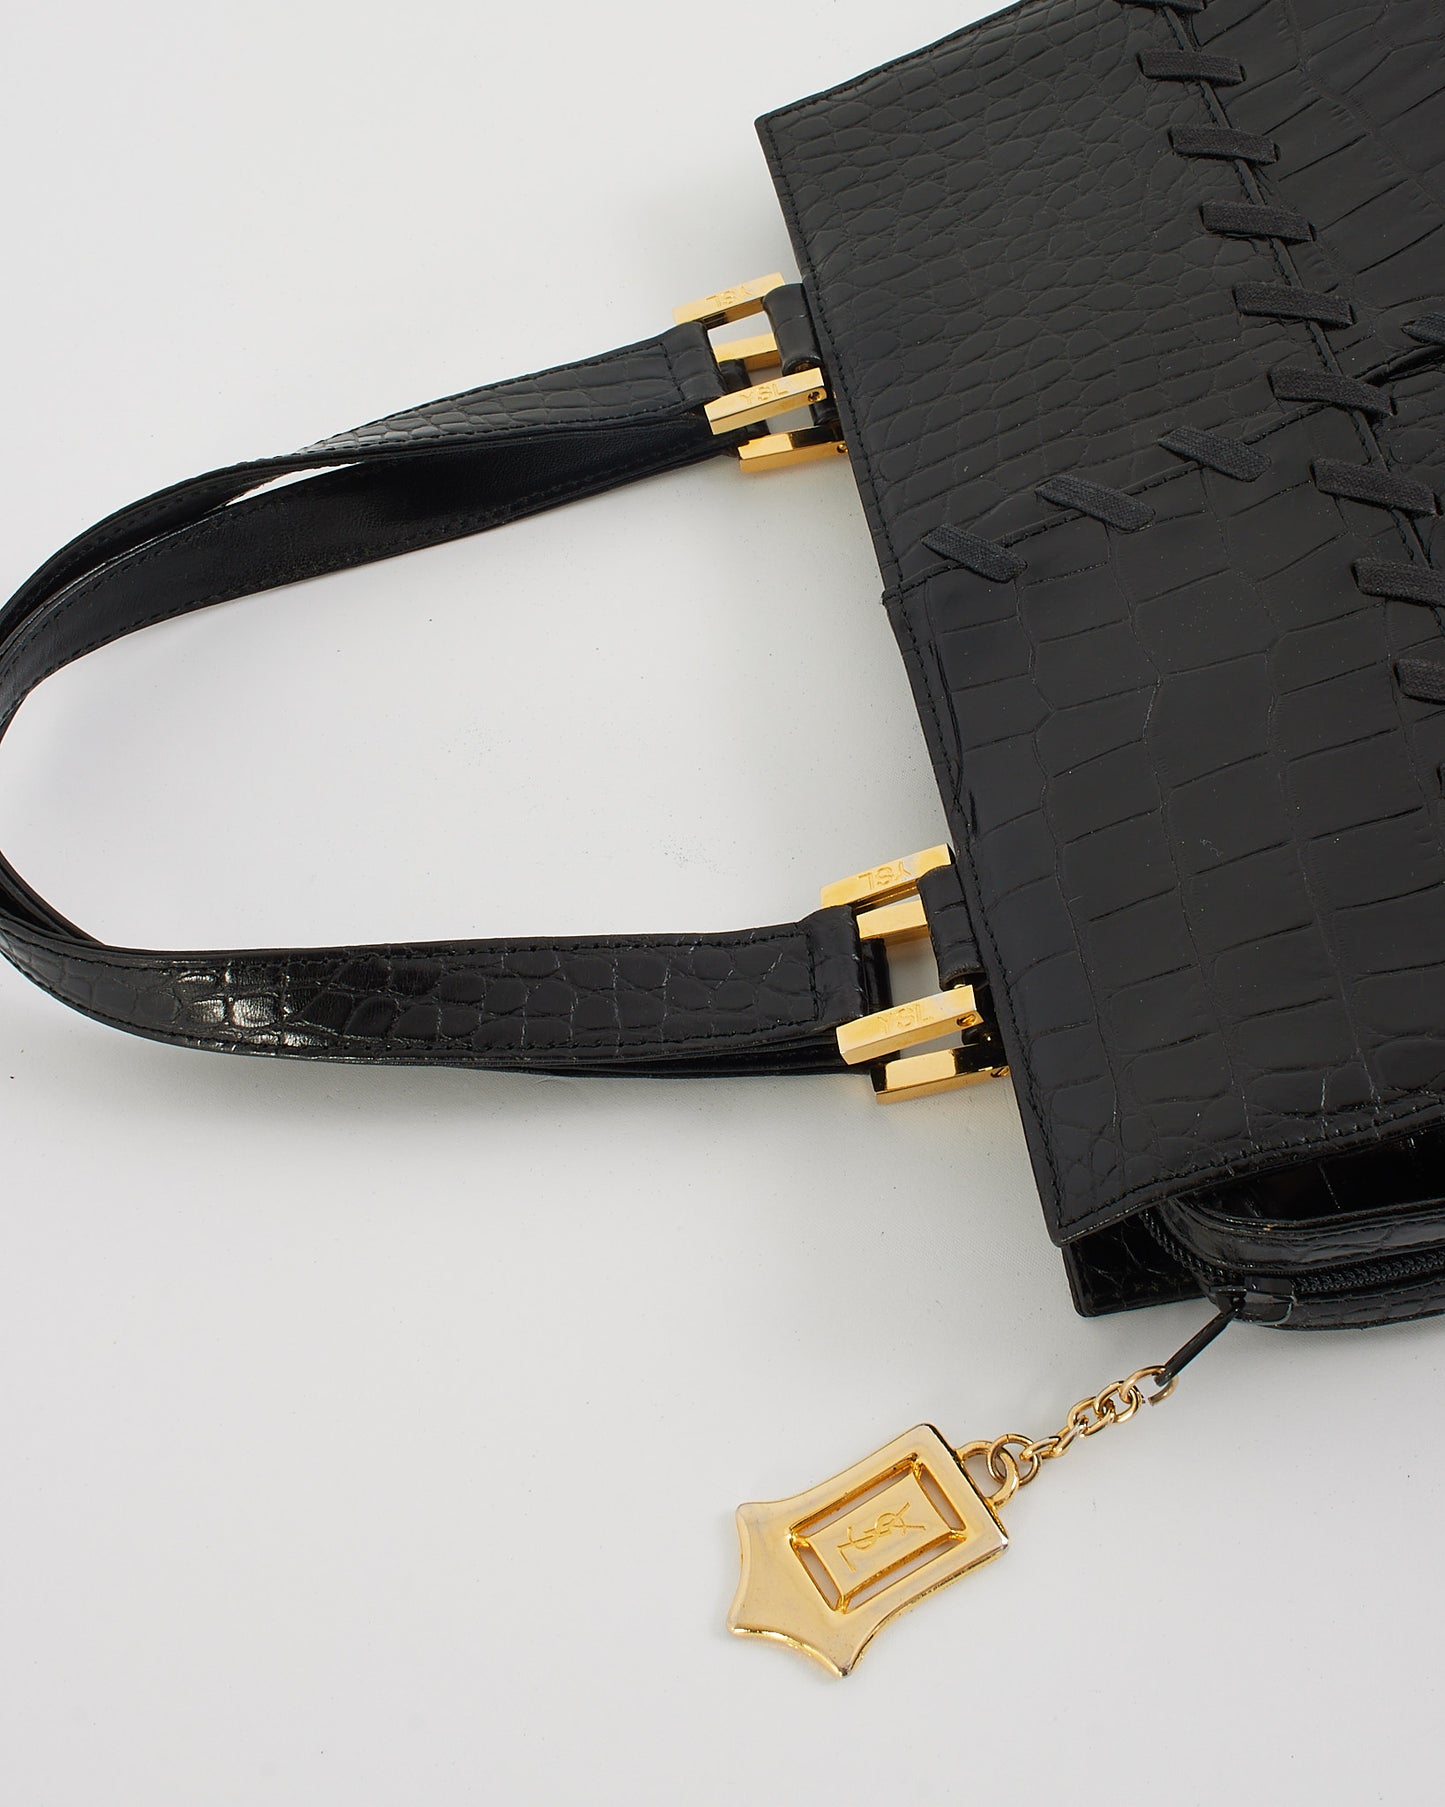 Saint Laurent Vintage Black Croc Embossed Leather Top Handle Bag